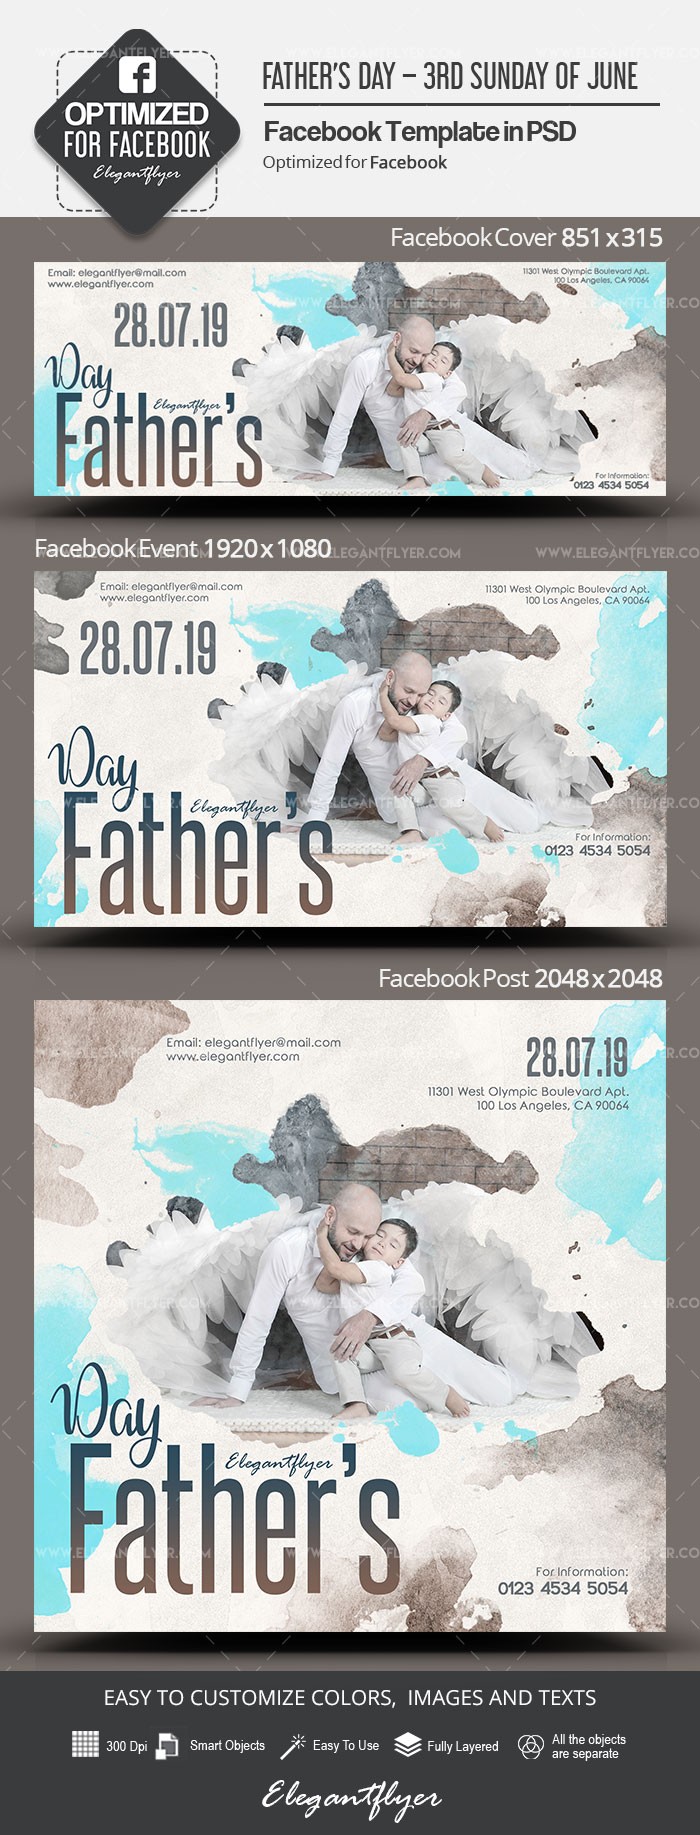 Father’s Day Facebook by ElegantFlyer